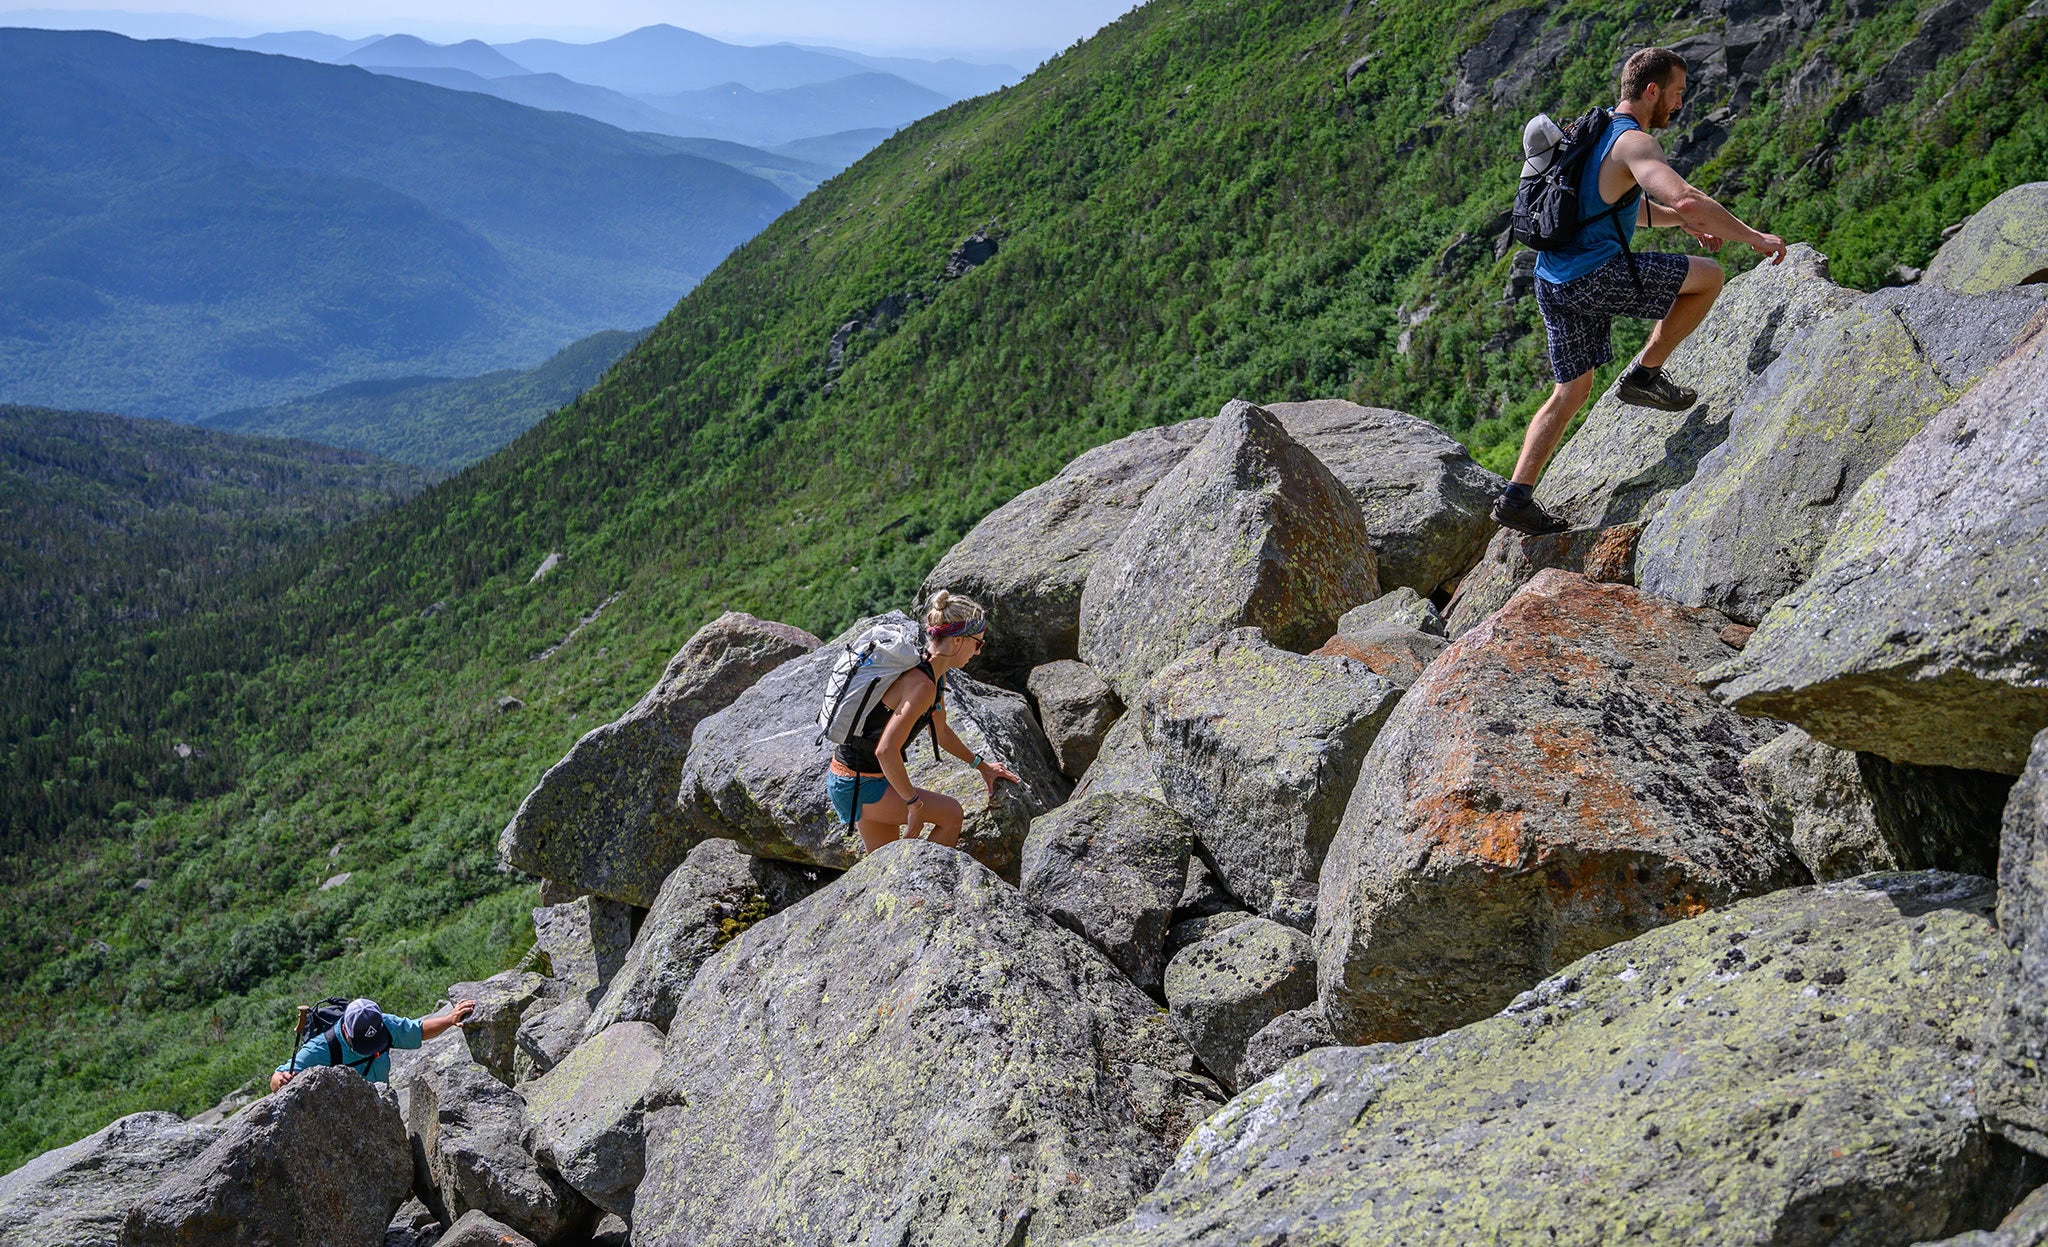 Ultralight backpackers climbing Mount Washington